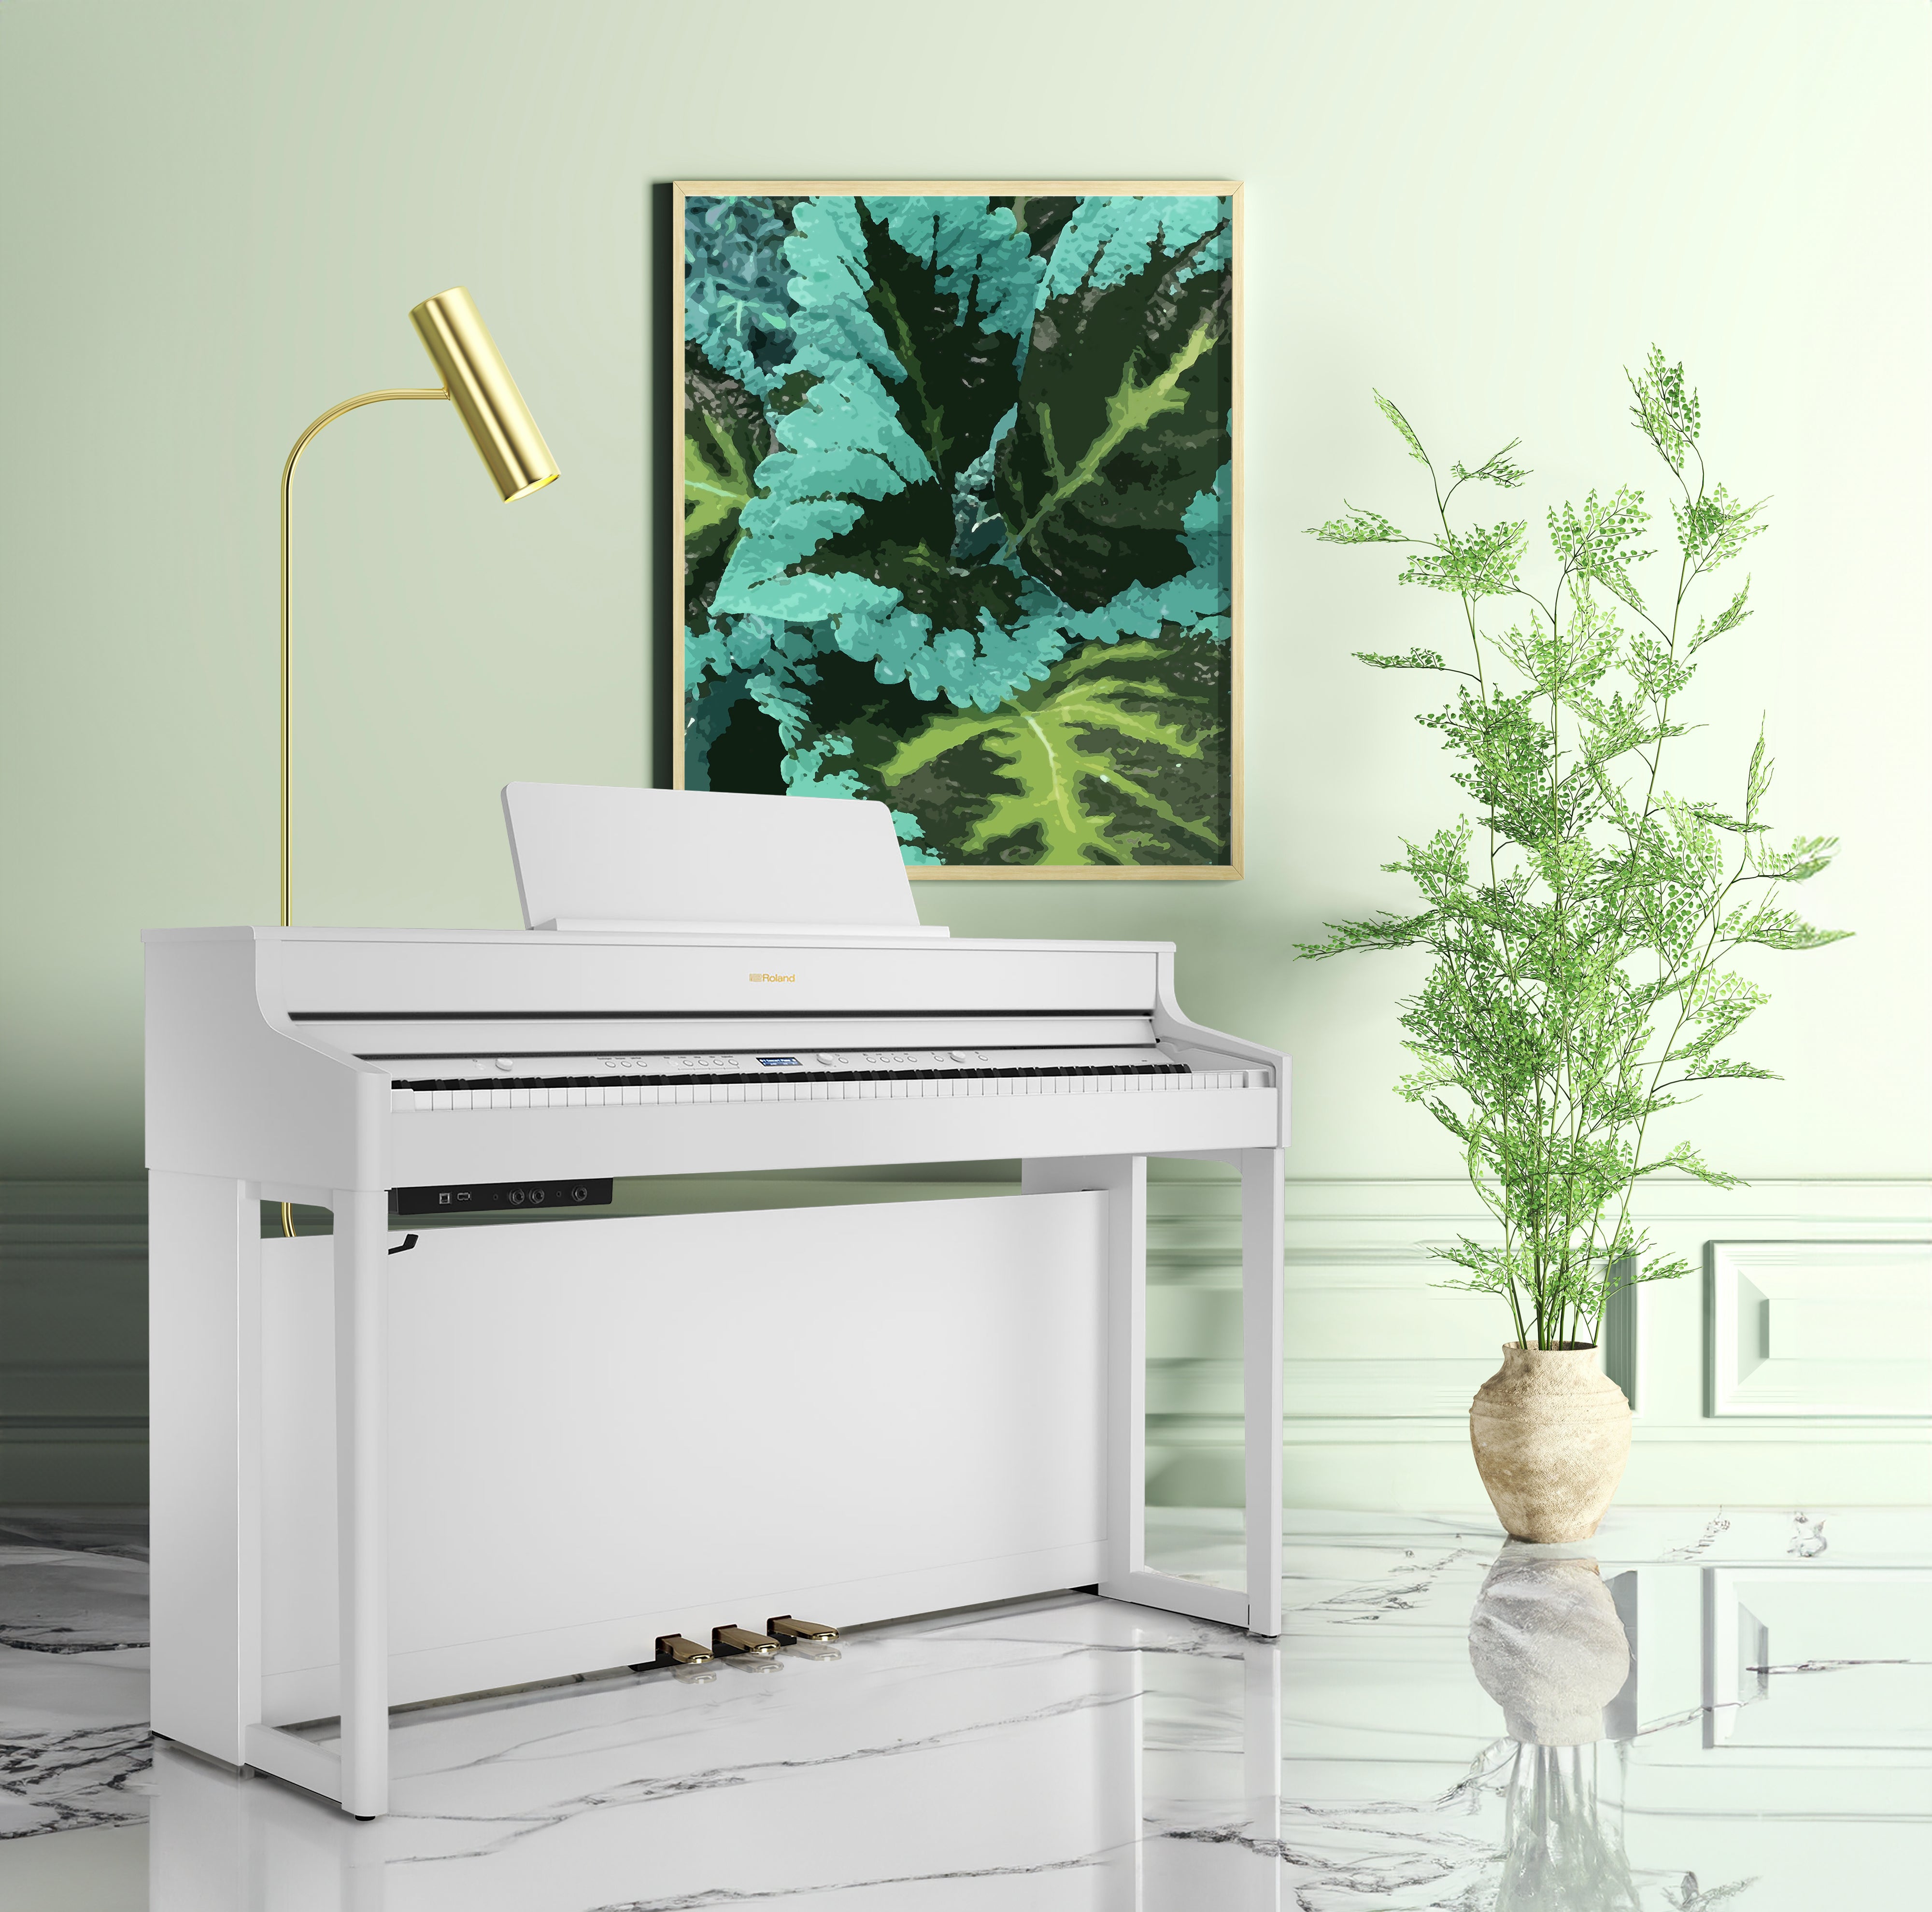 Roland HP702 Digital Piano - Satin White - in a stylish room